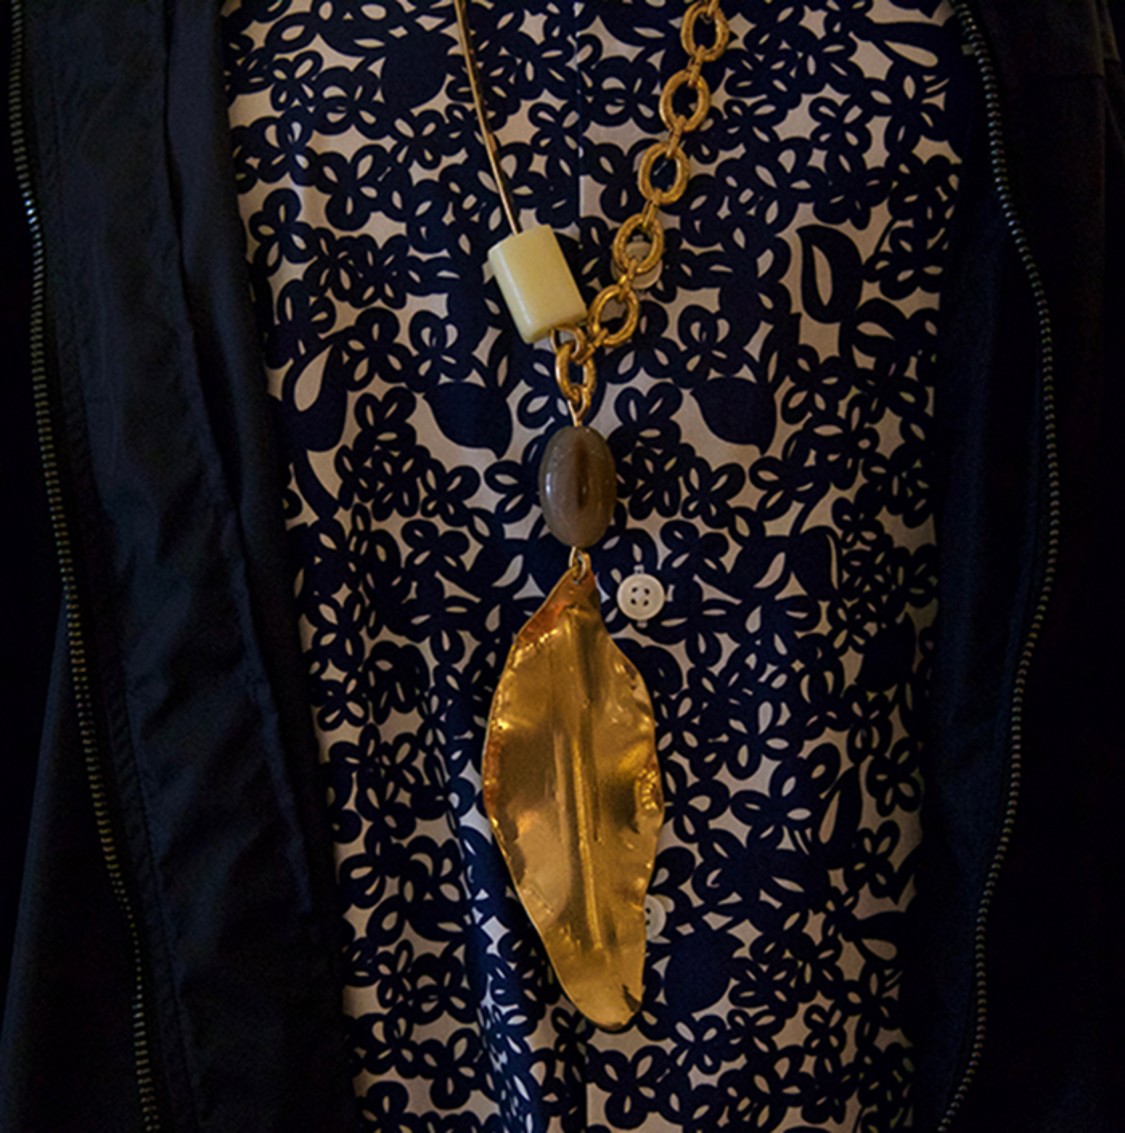 shop Marni Saldi Camicie: Camicia Marni, in cotone, stampa a fiori blu, maniche lunghe, fit maschile, collare classico.

Composizione: 100% cotone. number 1392